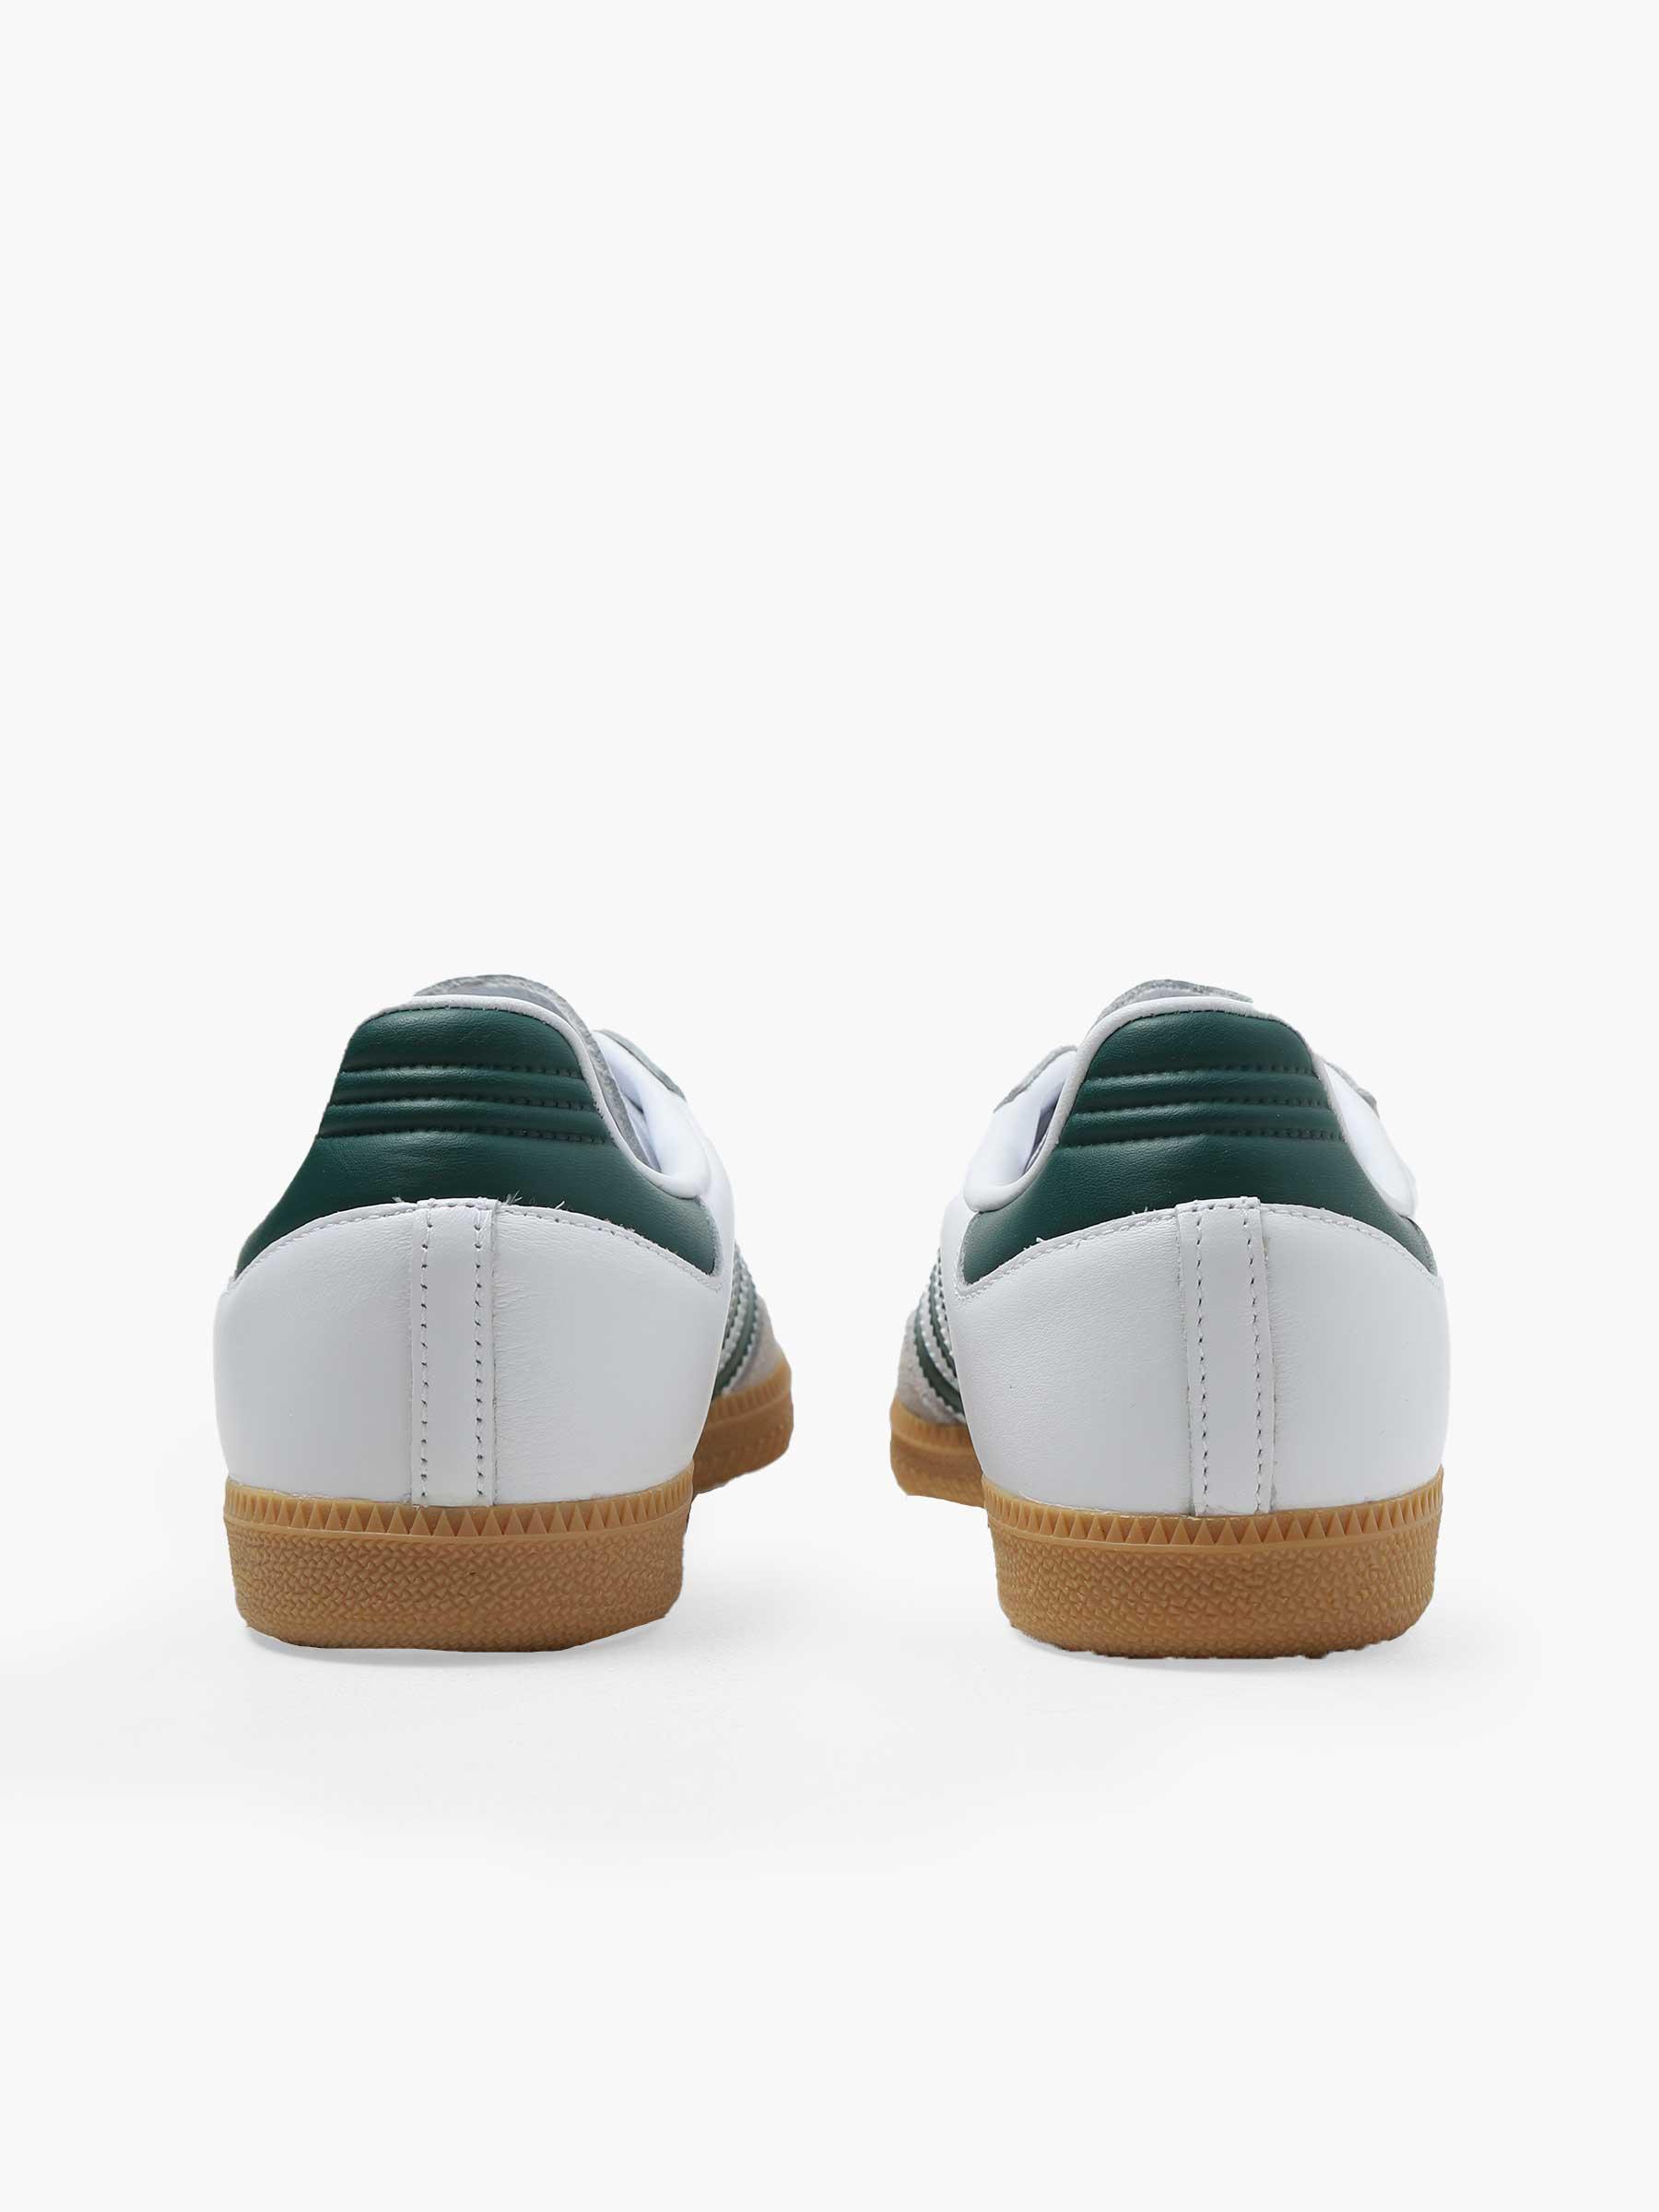 Samba Og Footwear White Core Green Gum3 IE3437